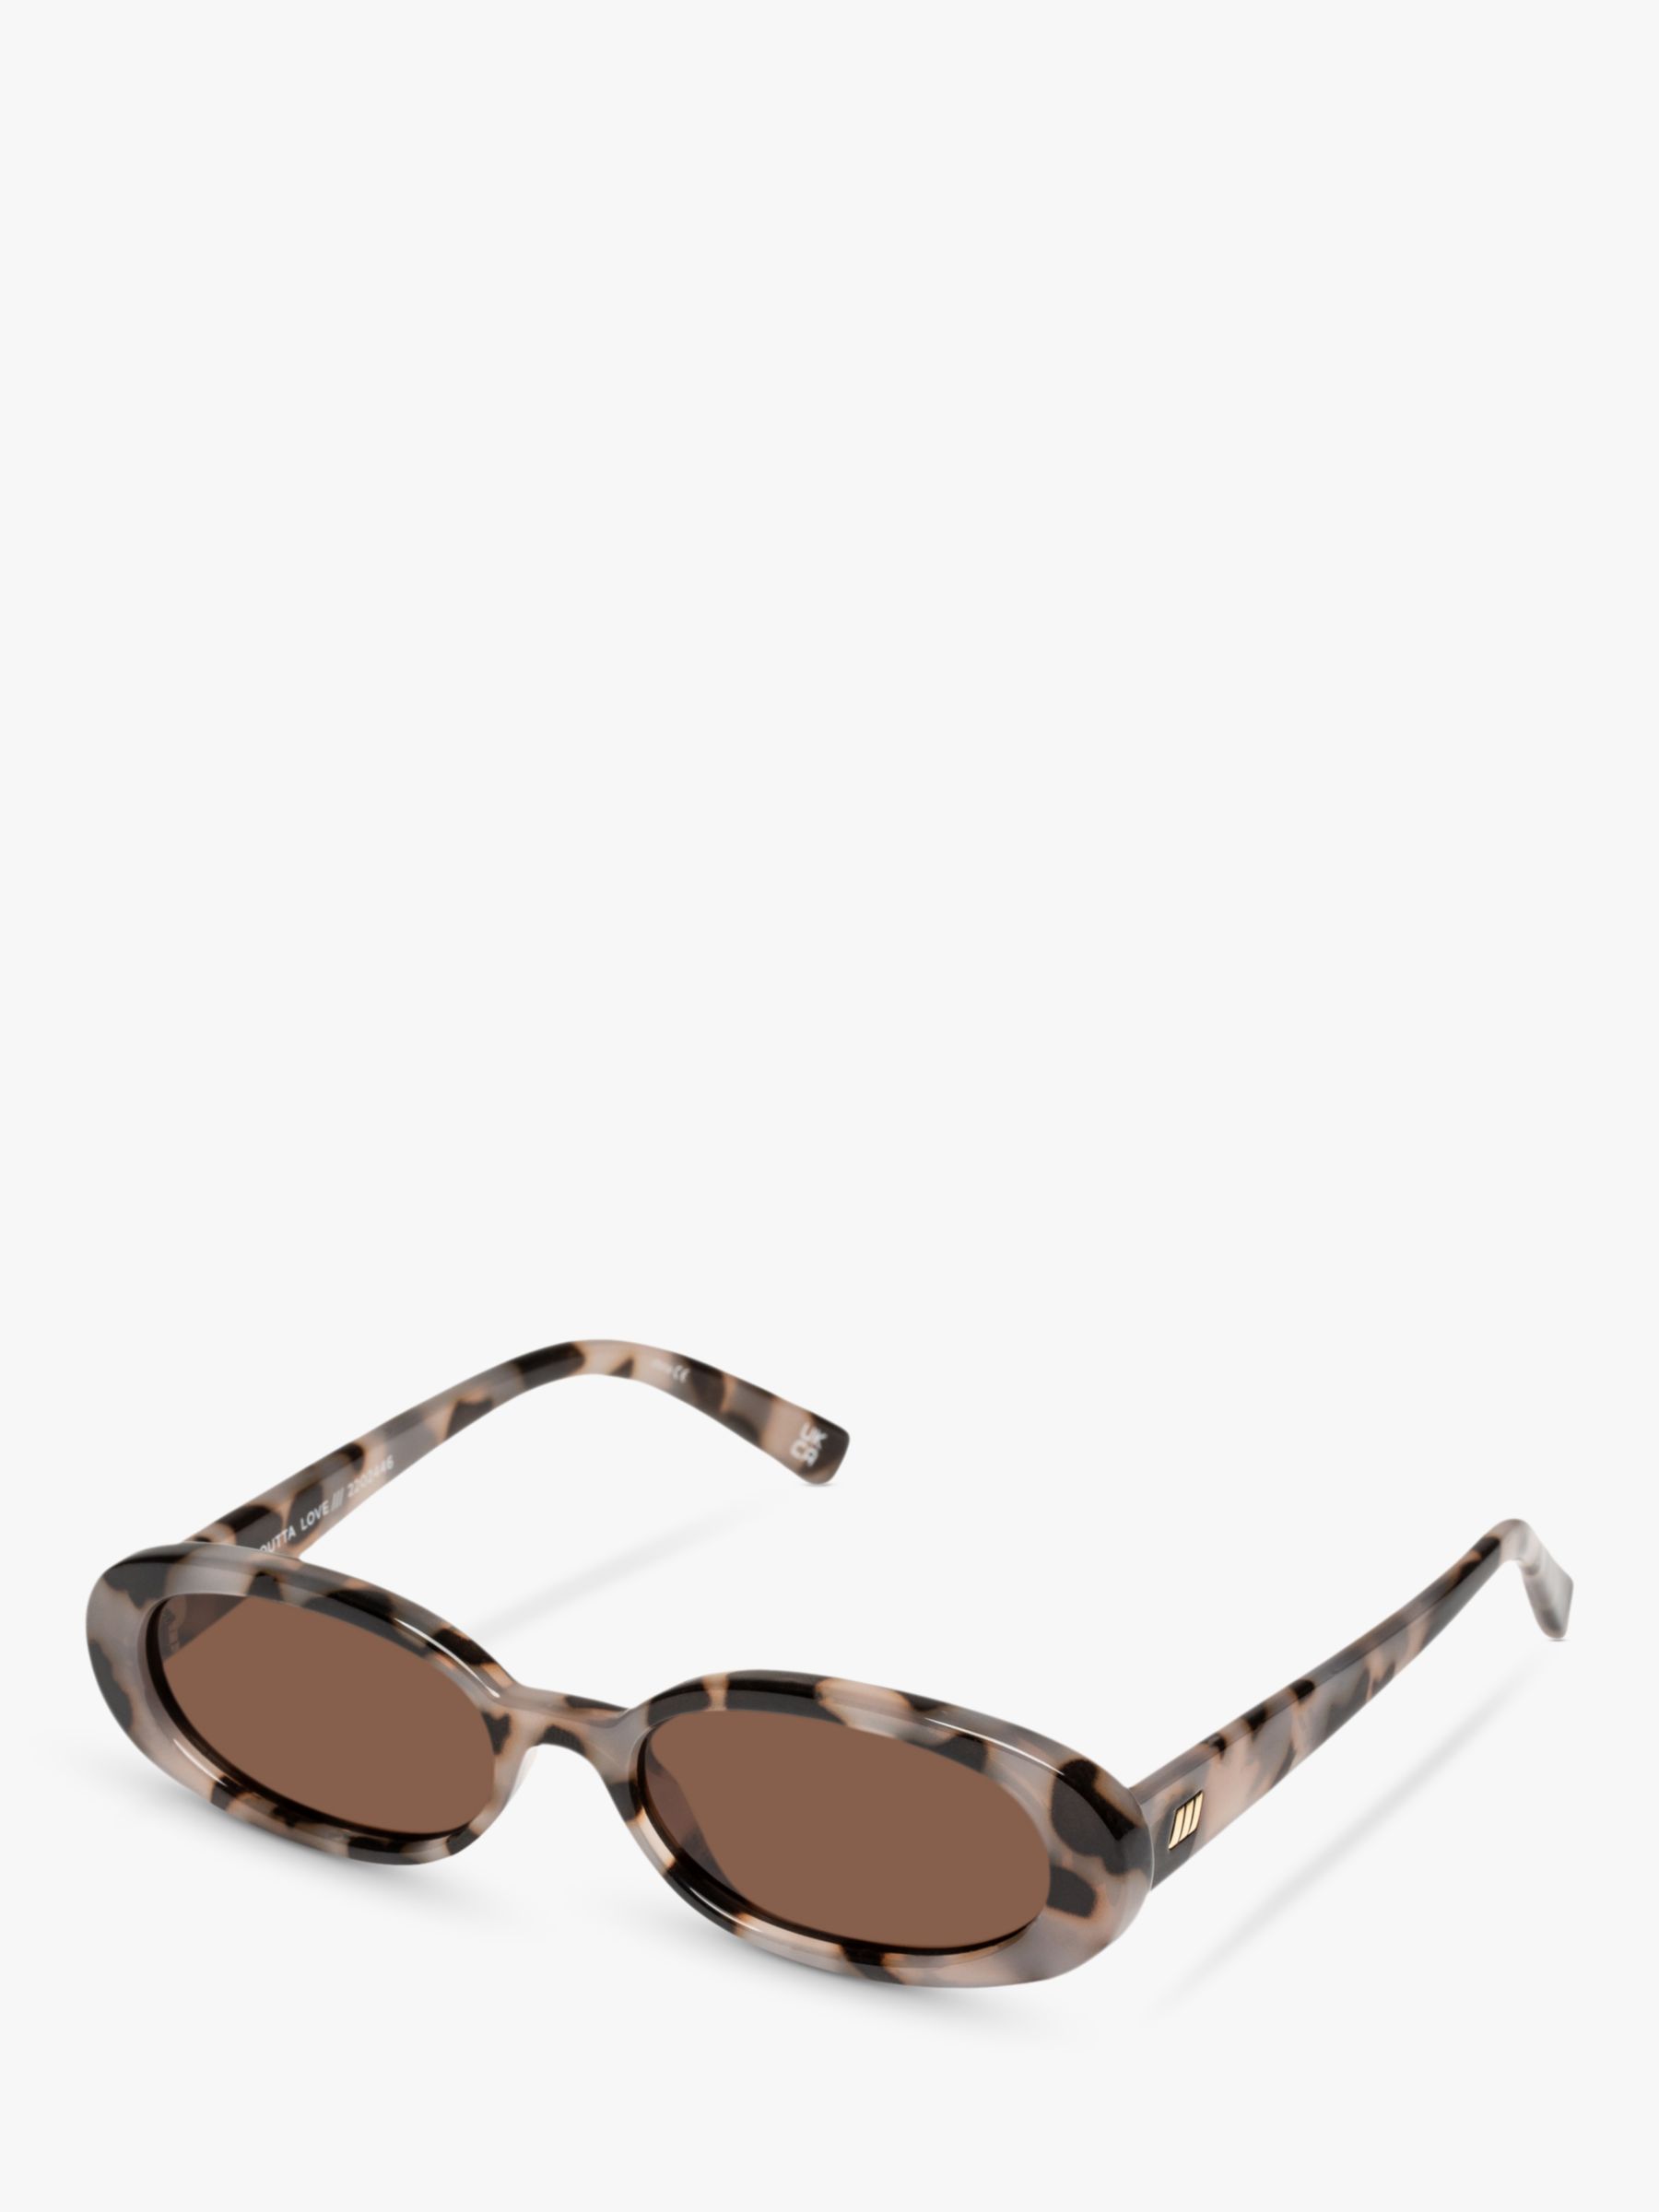 Buy Le Specs L5000176 Women's Outta Love Oval Sunglasses, Tortoise/Brown Online at johnlewis.com